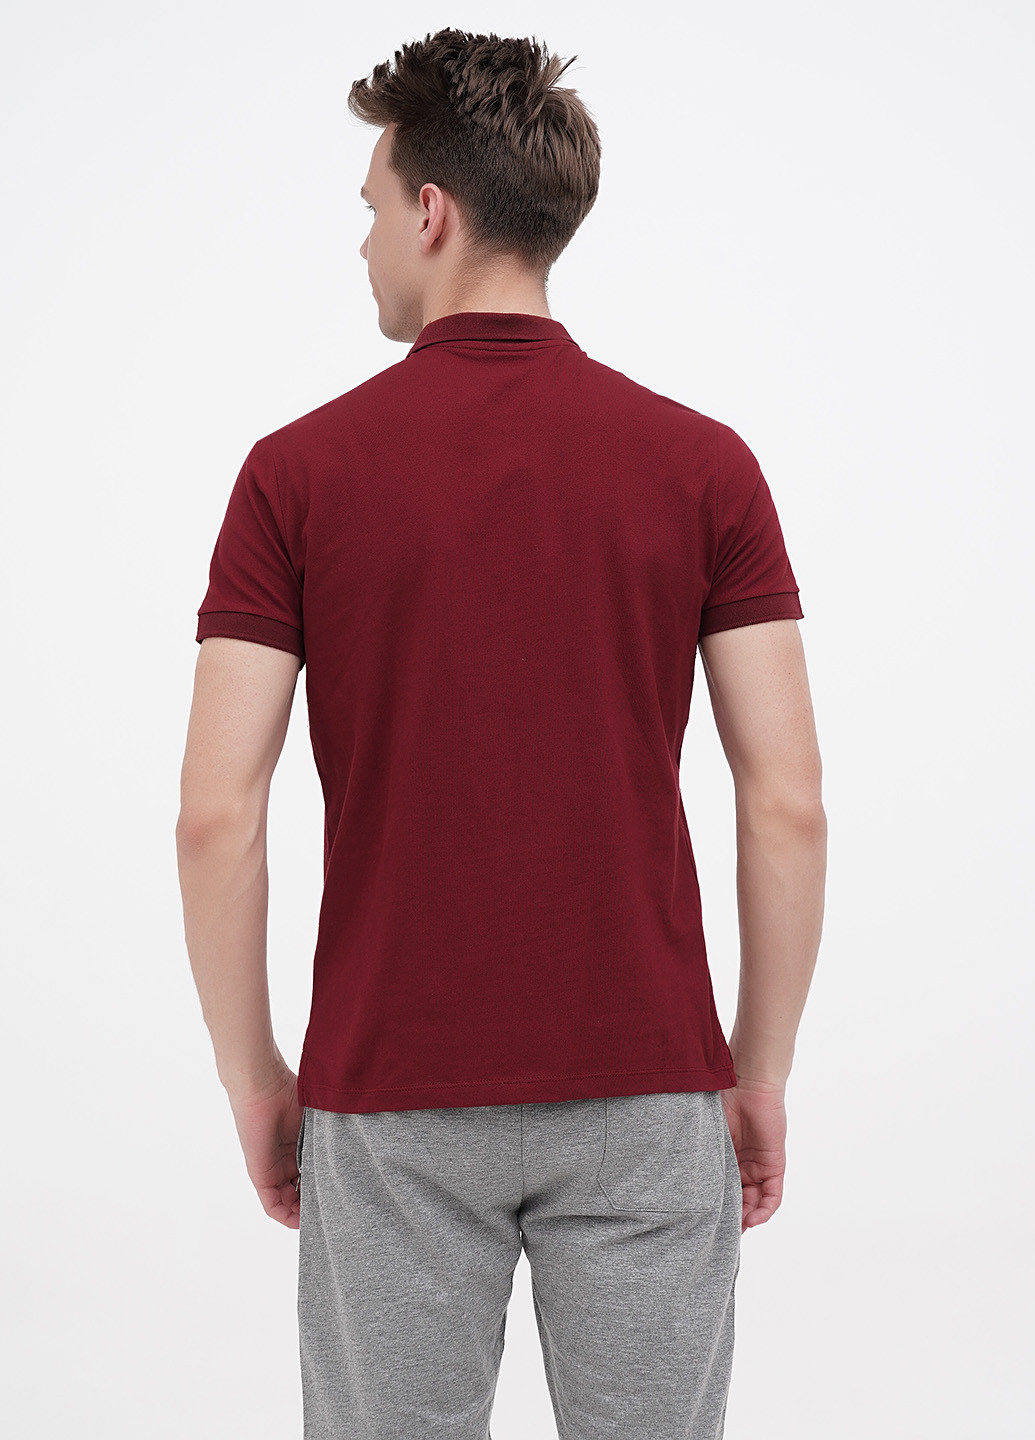 Бордовая футболка-поло для мужчин Armani Exchange с логотипом